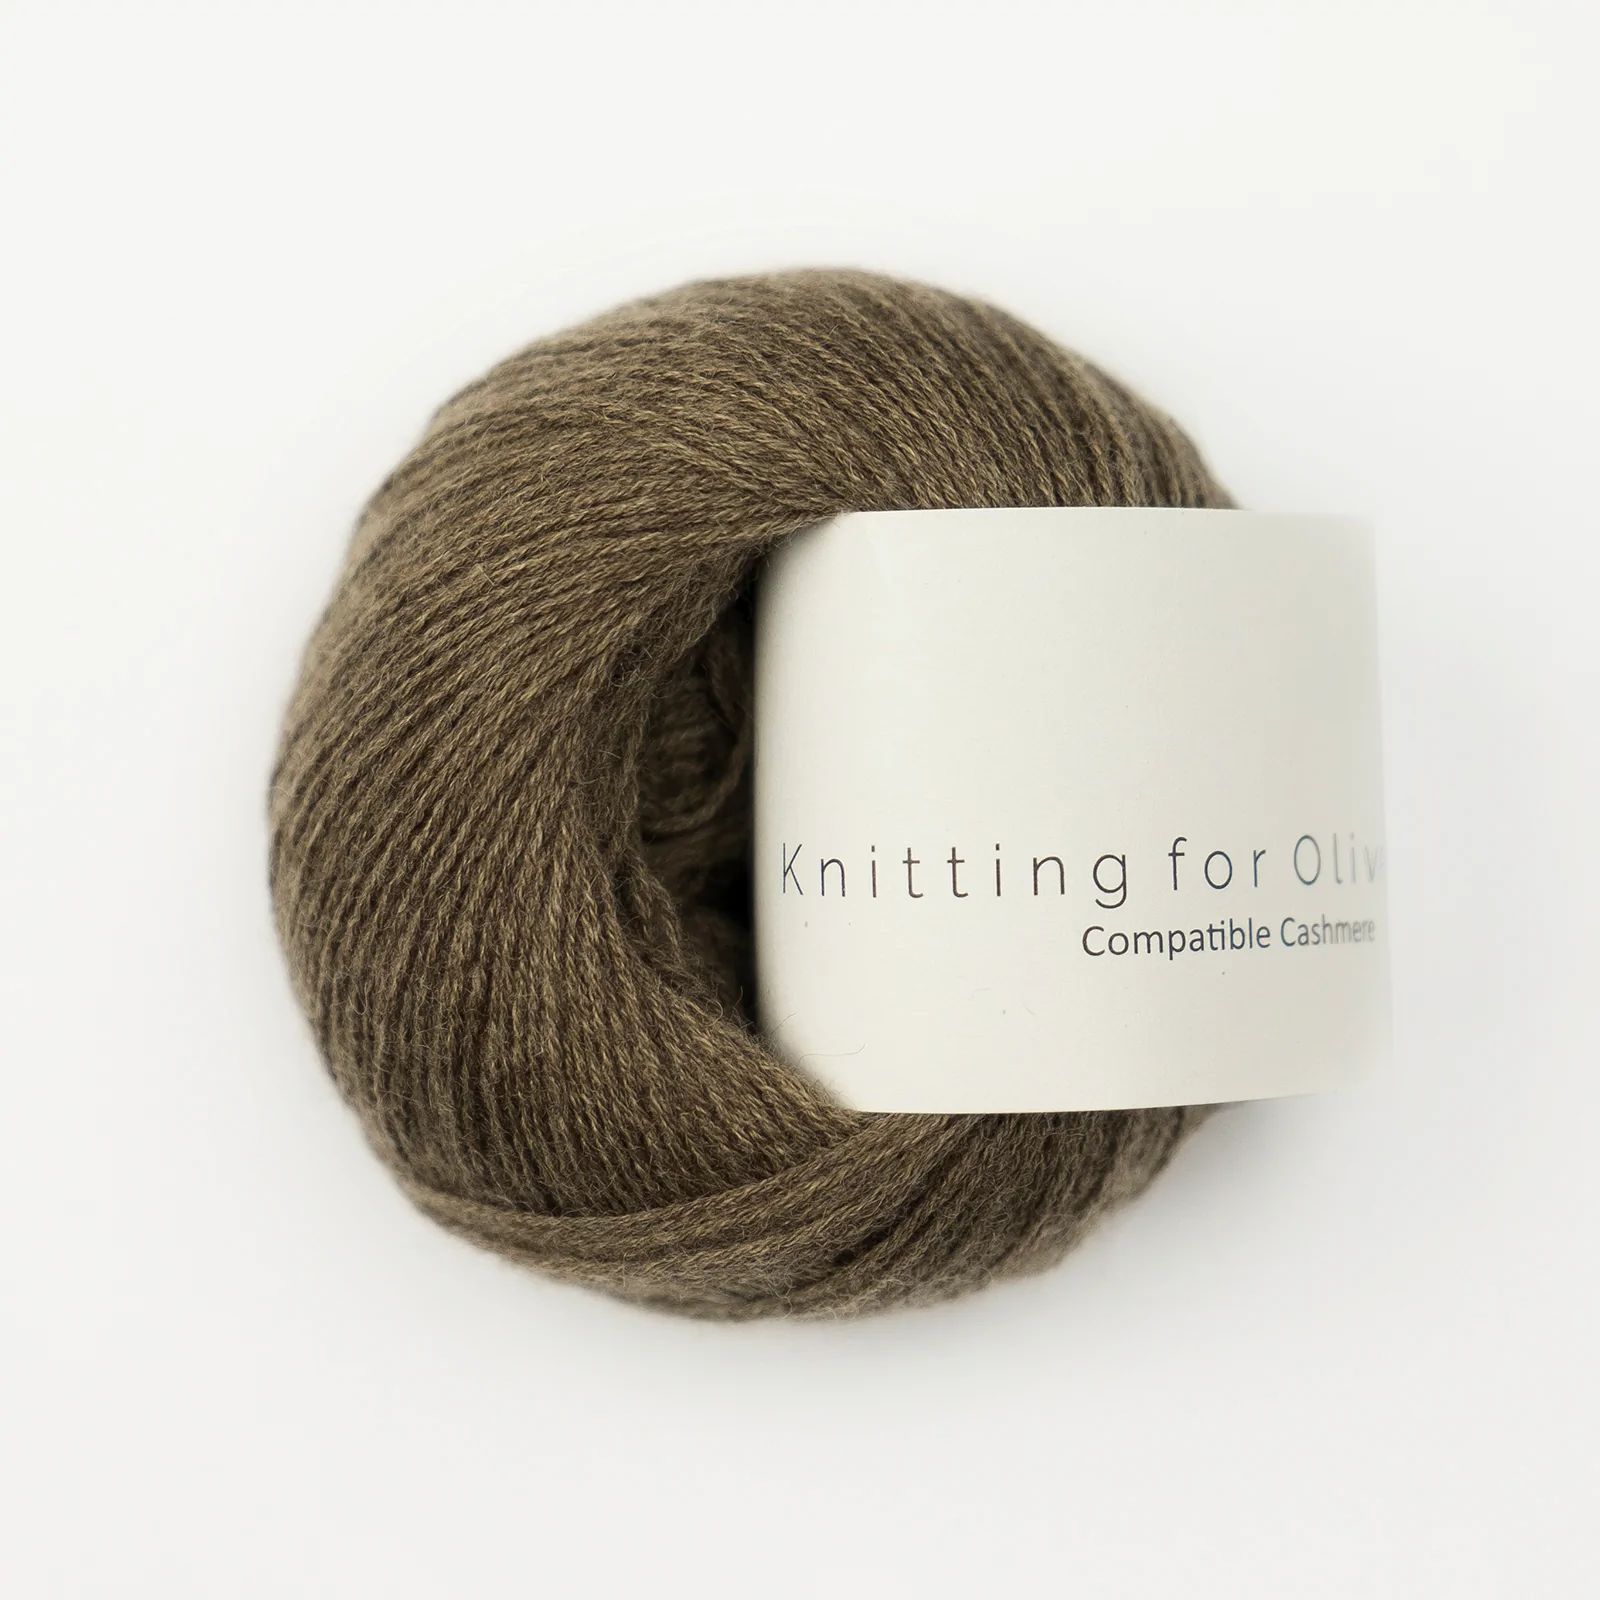 compatible cashmere knitting for olive | compatible cashmere: bark